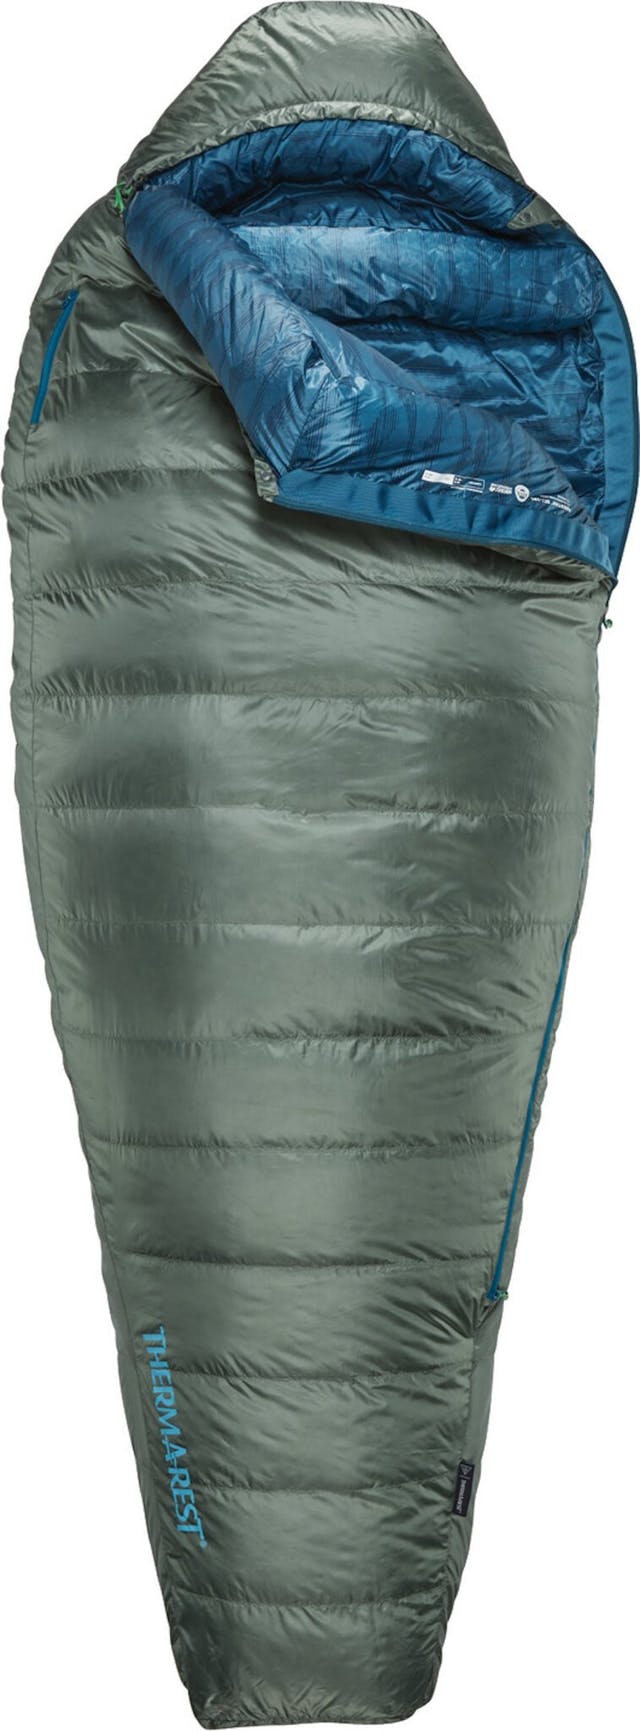 Product image for Questar 0°F/-18C Sleeping Bag - Regular